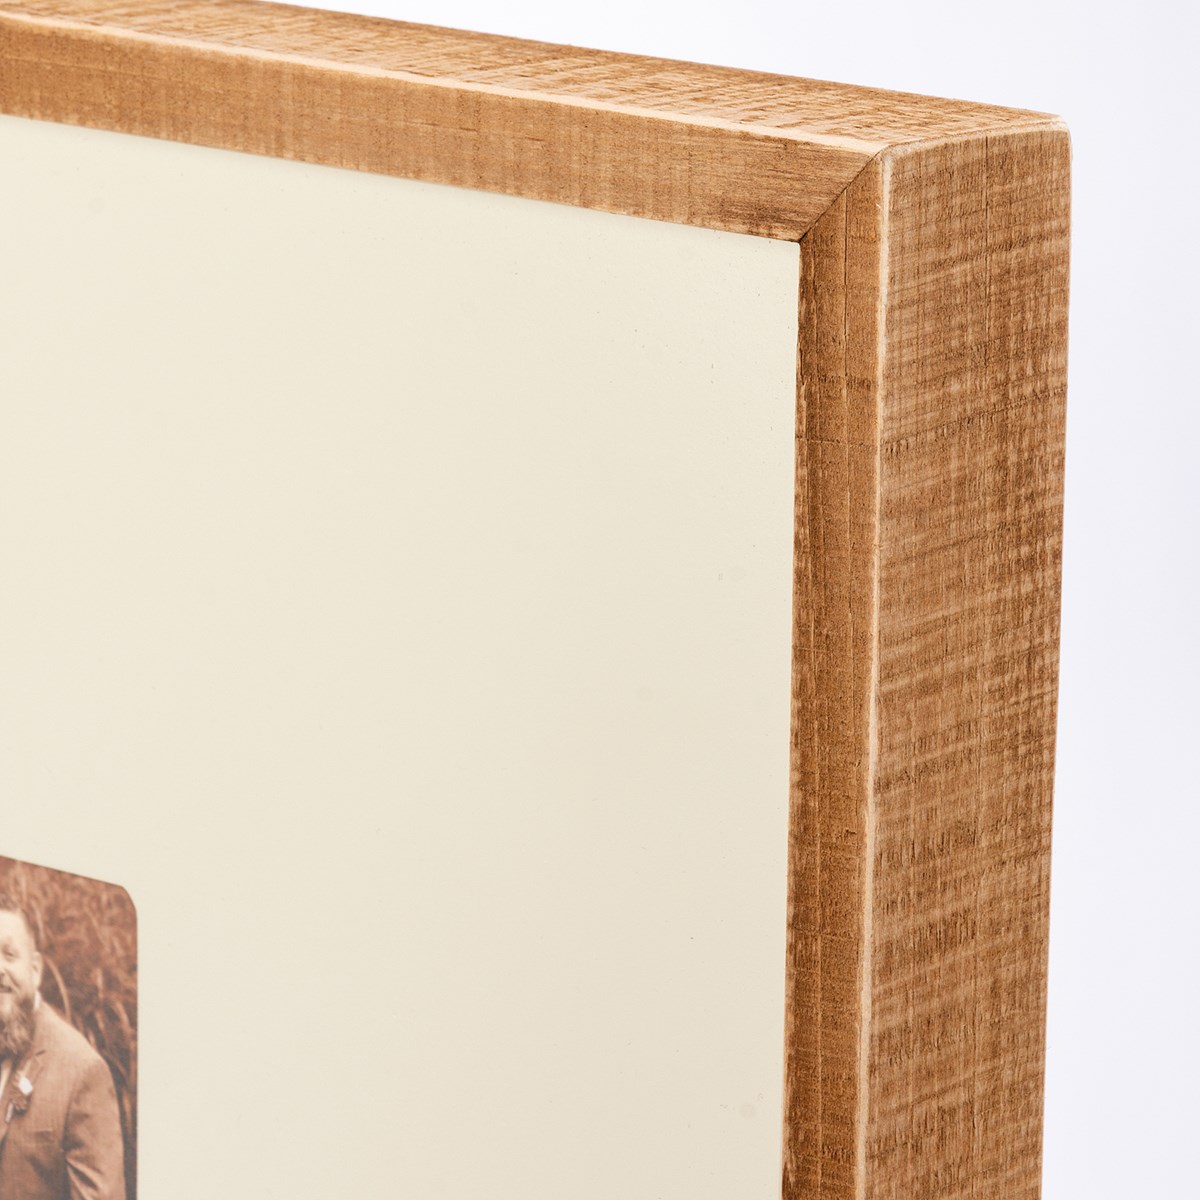 Inset Box Frame - Wedding - 18" x 18" x 1.75", Fits 5" x 7" Photo - Wood, Glass